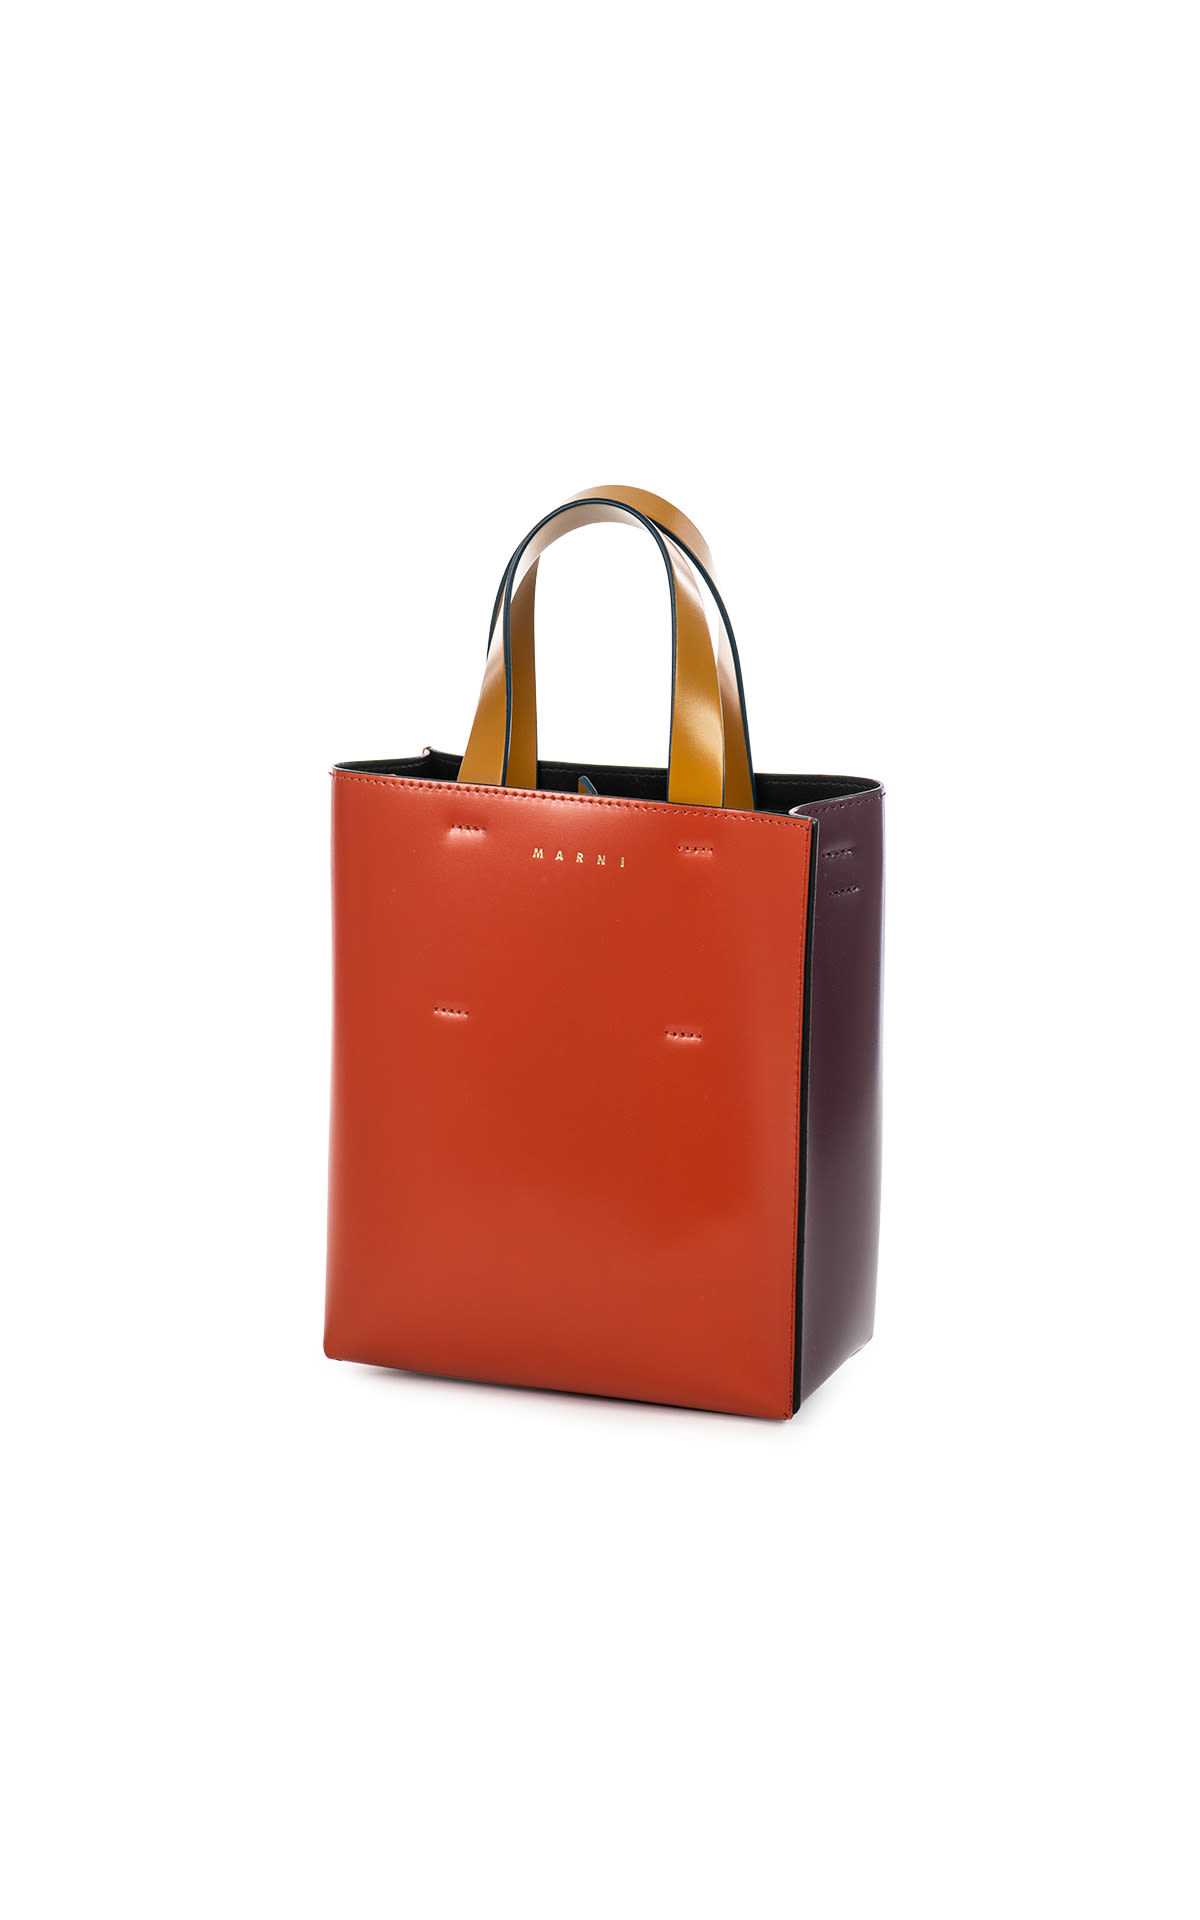 Marni Red handbag